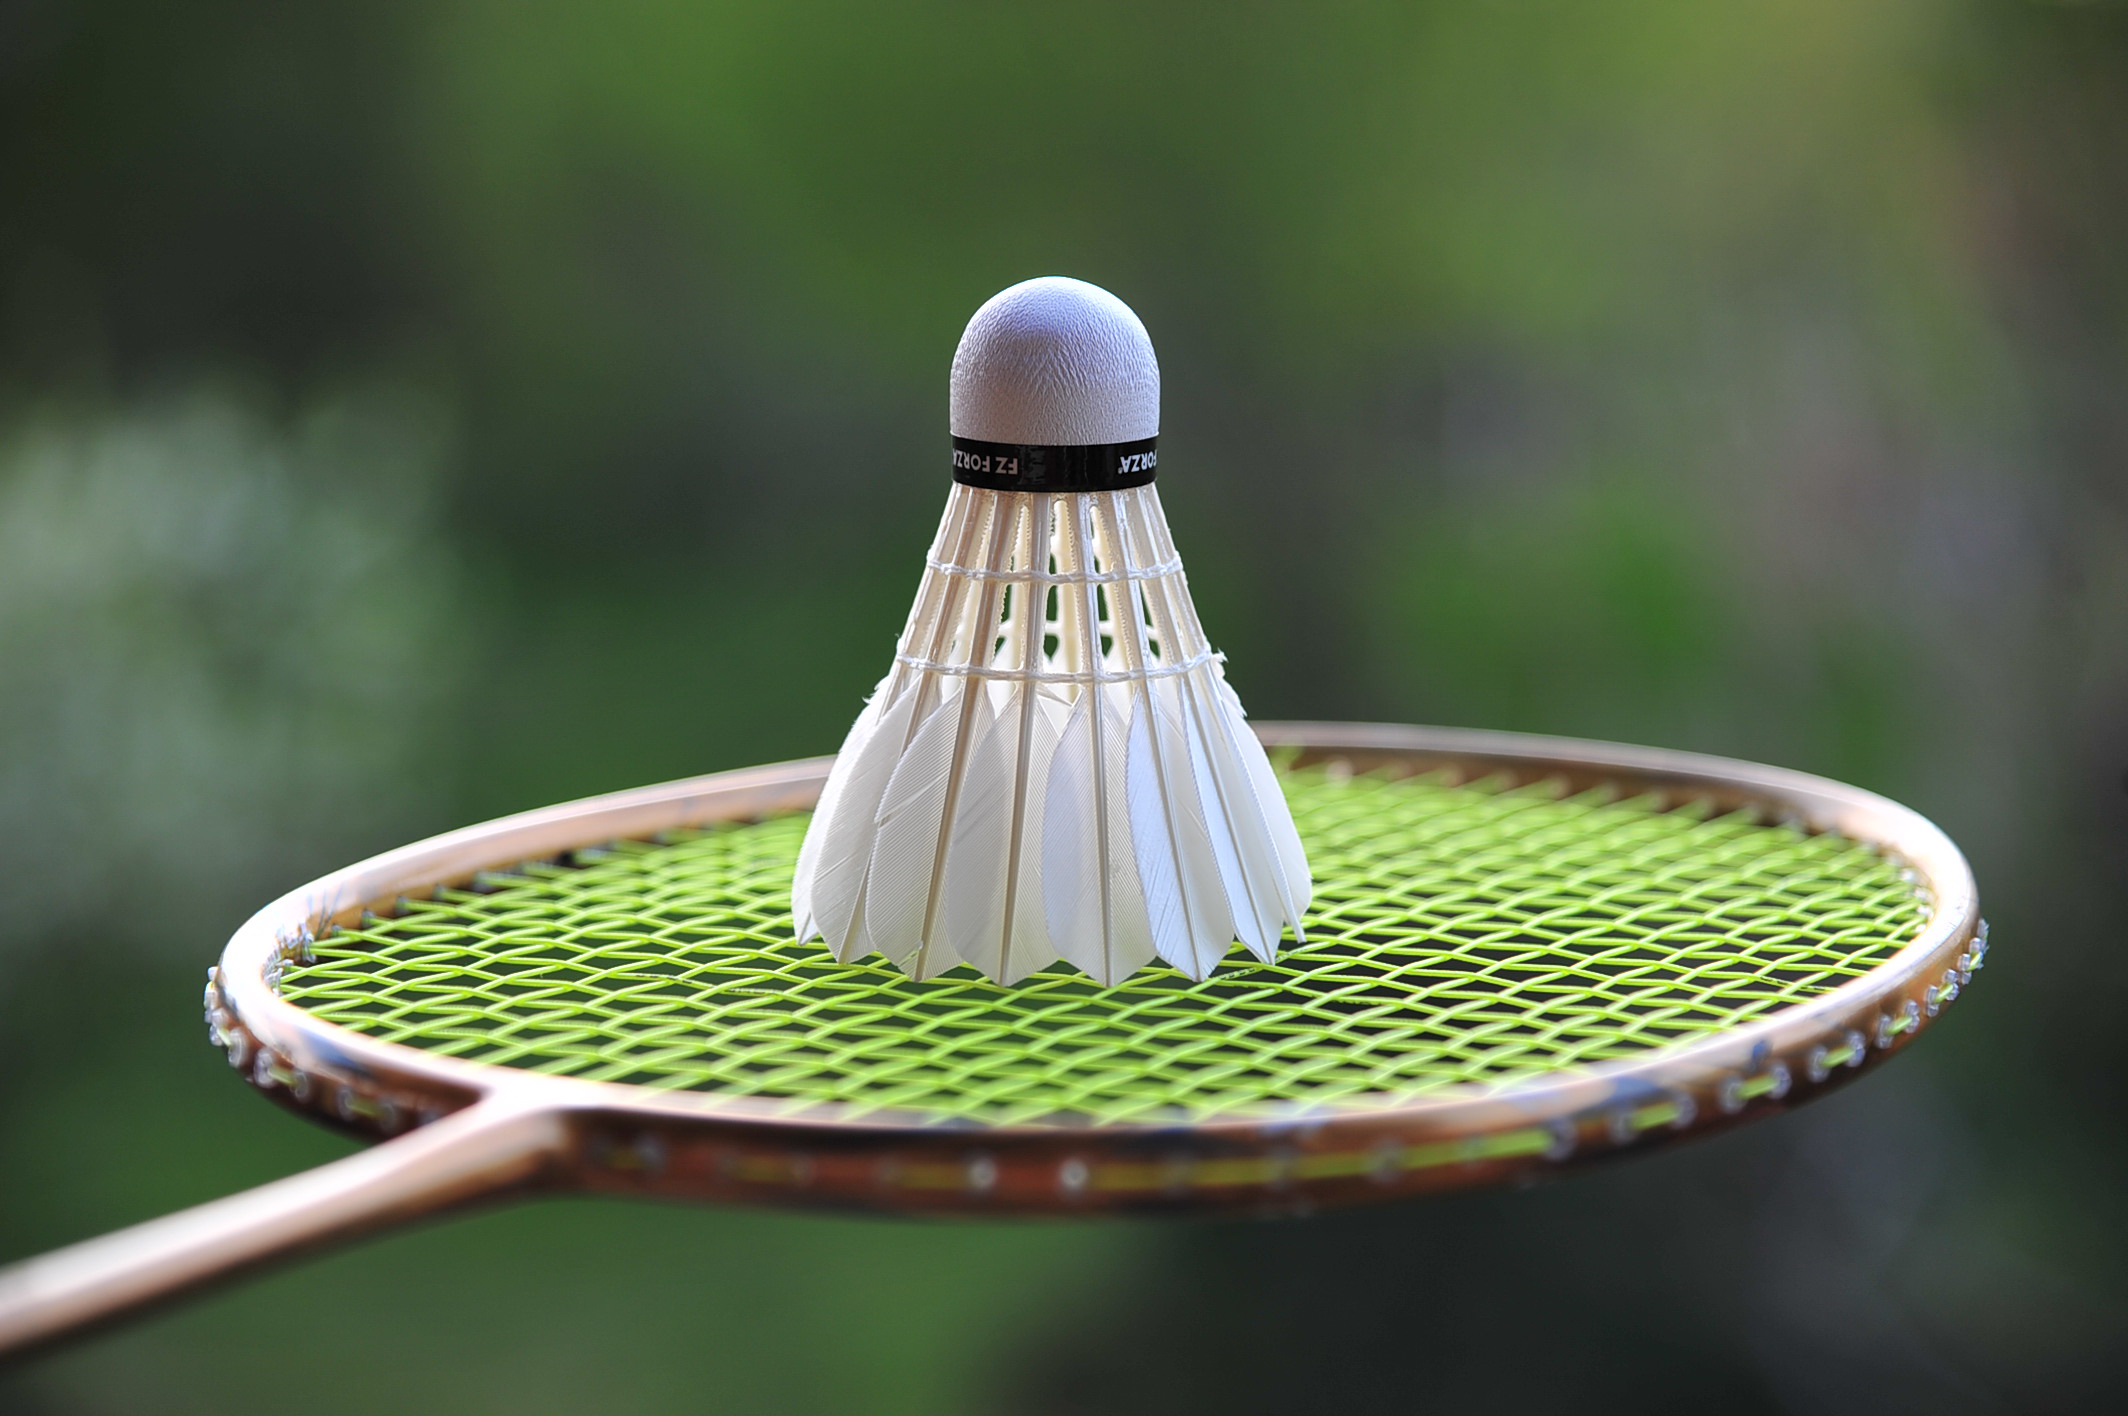 Om klubben – Asker Badminton